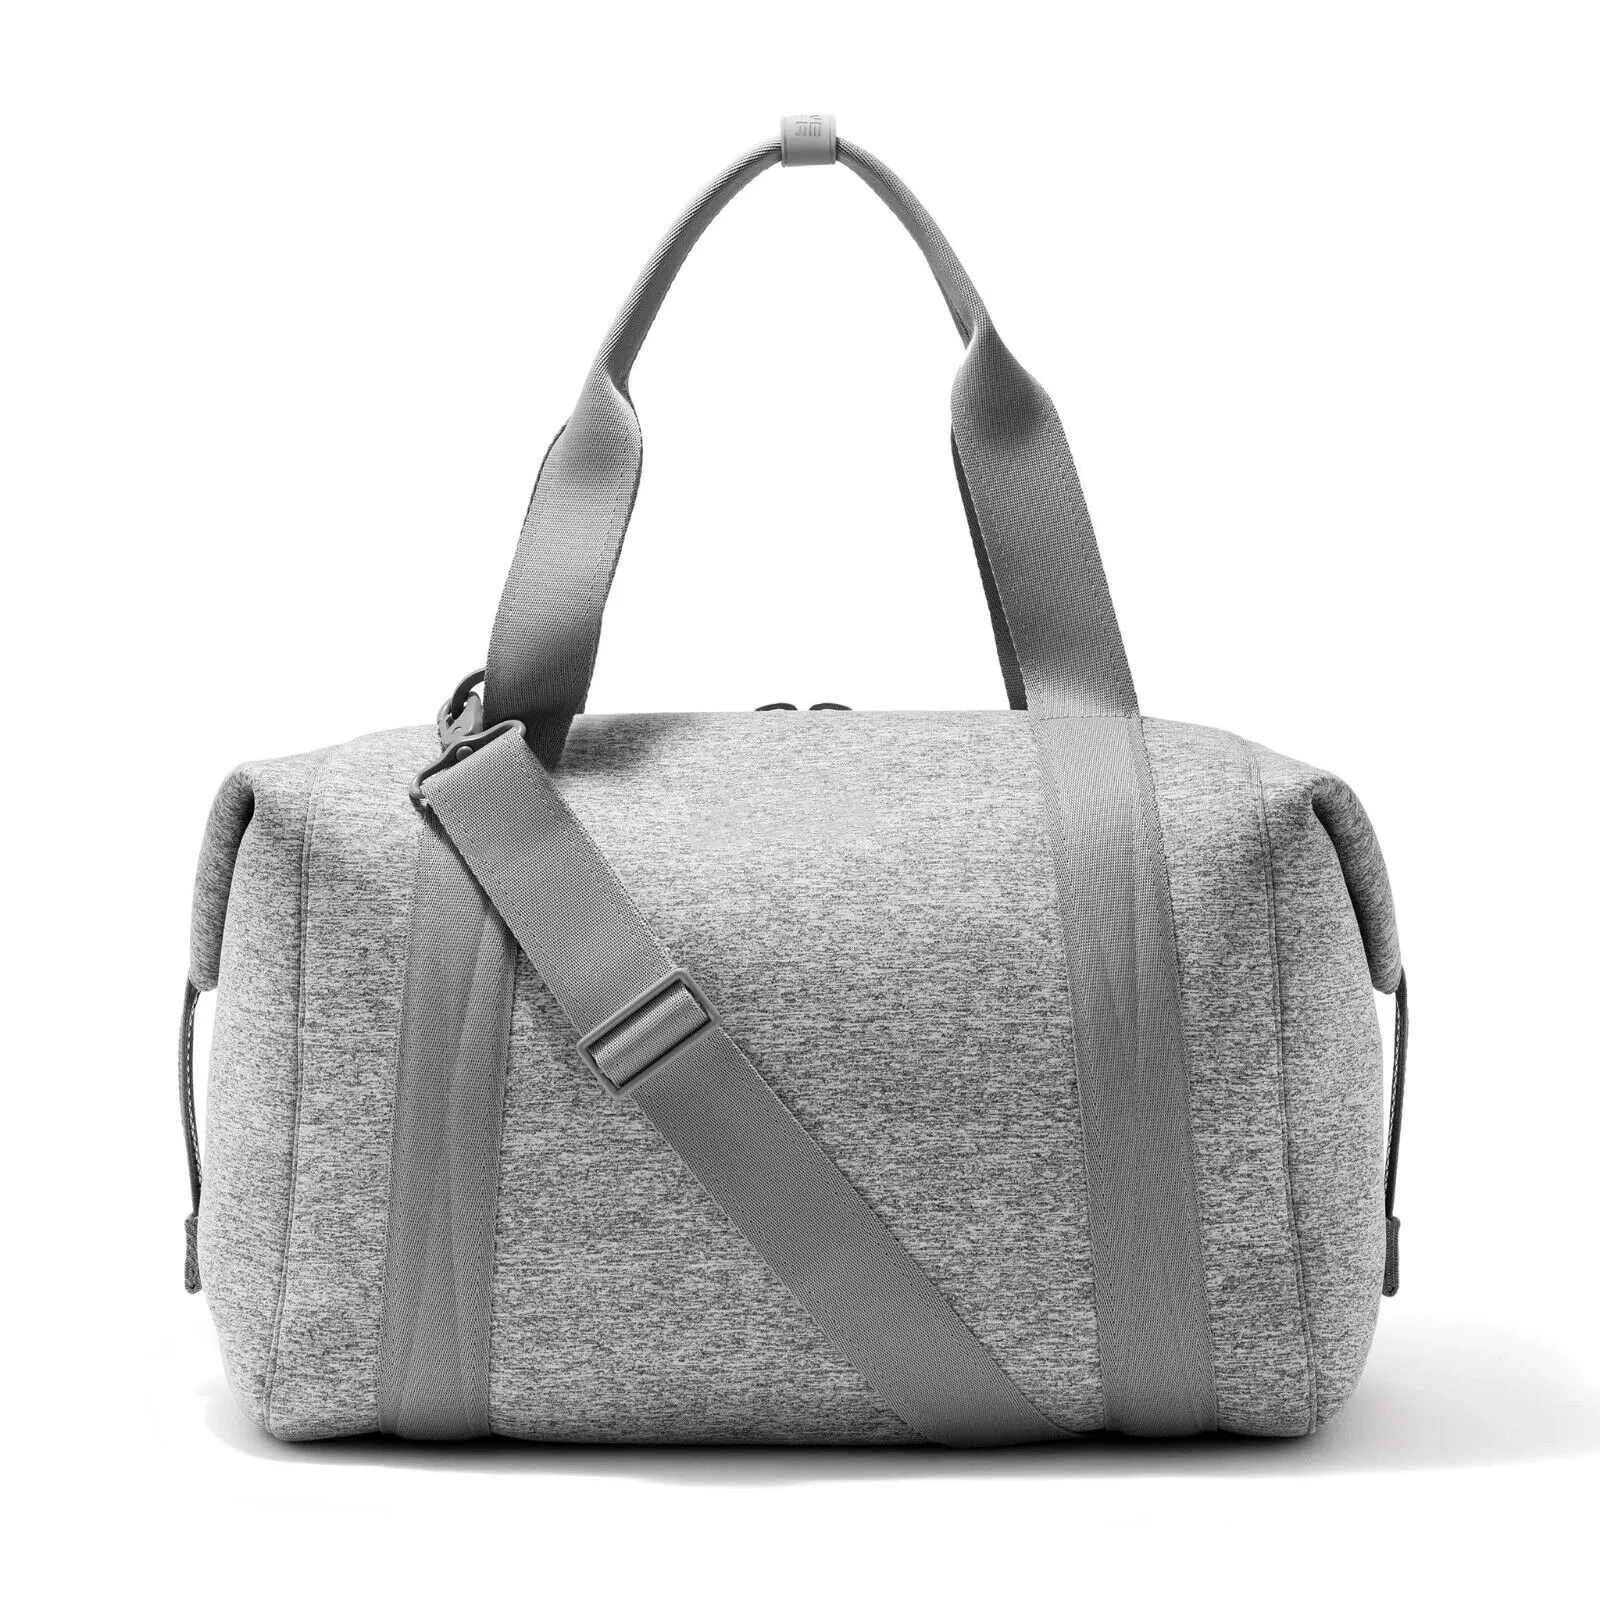 Custom High Quality Large Bag Neoprene Makeup Bag Big Zipper Carrying Tote Bag carryall holdall For Travel